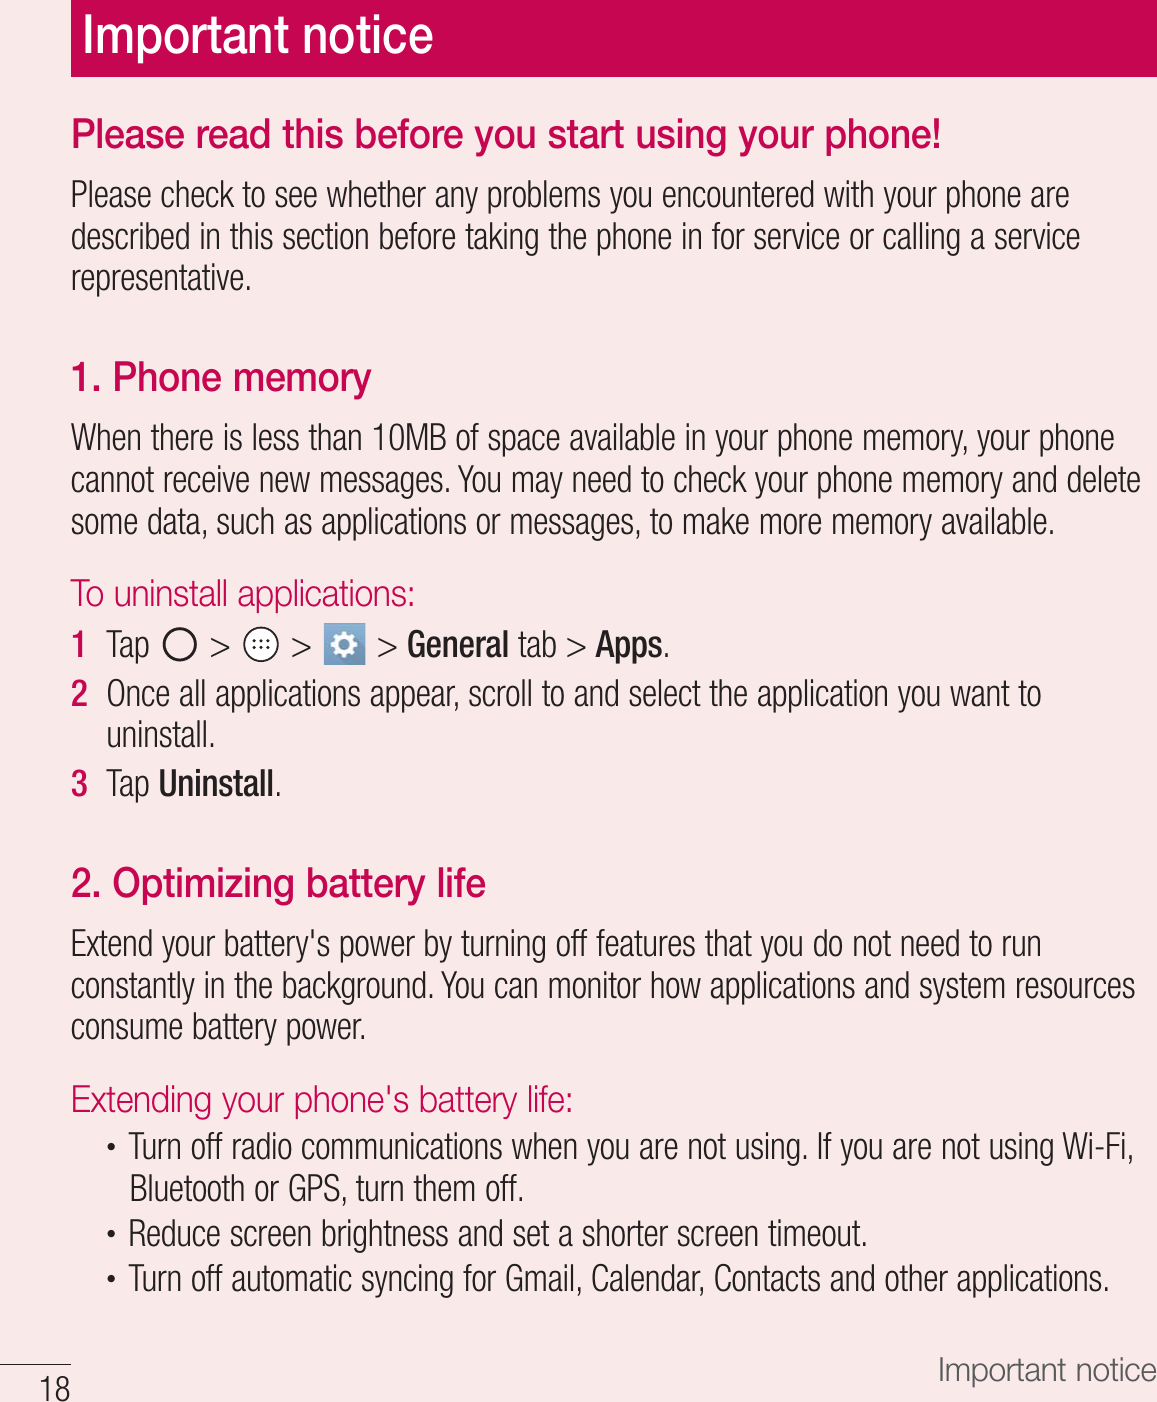  Important noticePlease read this before you start using your phone!1MFBTFDIFDLUPTFFXIFUIFSBOZQSPCMFNTZPVFODPVOUFSFEXJUIZPVSQIPOFBSFEFTDSJCFEJOUIJTTFDUJPOCFGPSFUBLJOHUIFQIPOFJOGPSTFSWJDFPSDBMMJOHBTFSWJDFSFQSFTFOUBUJWF1. Phone memory 8IFOUIFSFJTMFTTUIBO.#PGTQBDFBWBJMBCMFJOZPVSQIPOFNFNPSZZPVSQIPOFDBOOPUSFDFJWFOFXNFTTBHFT:PVNBZOFFEUPDIFDLZPVSQIPOFNFNPSZBOEEFMFUFTPNFEBUBTVDIBTBQQMJDBUJPOTPSNFTTBHFTUPNBLFNPSFNFNPSZBWBJMBCMFTo uninstall applications:1  5BQ   GeneralUBCApps2  0ODFBMMBQQMJDBUJPOTBQQFBSTDSPMMUPBOETFMFDUUIFBQQMJDBUJPOZPVXBOUUPVOJOTUBMM3  5BQUninstall2. Optimizing battery life&amp;YUFOEZPVSCBUUFSZhTQPXFSCZUVSOJOHPGGGFBUVSFTUIBUZPVEPOPUOFFEUPSVODPOTUBOUMZJOUIFCBDLHSPVOE:PVDBONPOJUPSIPXBQQMJDBUJPOTBOETZTUFNSFTPVSDFTDPOTVNFCBUUFSZQPXFSExtending your phone&apos;s battery life:t 5VSOPGGSBEJPDPNNVOJDBUJPOTXIFOZPVBSFOPUVTJOH*GZPVBSFOPUVTJOH8J&apos;J#MVFUPPUIPS(14UVSOUIFNPGGt 3FEVDFTDSFFOCSJHIUOFTTBOETFUBTIPSUFSTDSFFOUJNFPVUt 5VSOPGGBVUPNBUJDTZODJOHGPS(NBJM$BMFOEBS$POUBDUTBOEPUIFSBQQMJDBUJPOTImportant notice